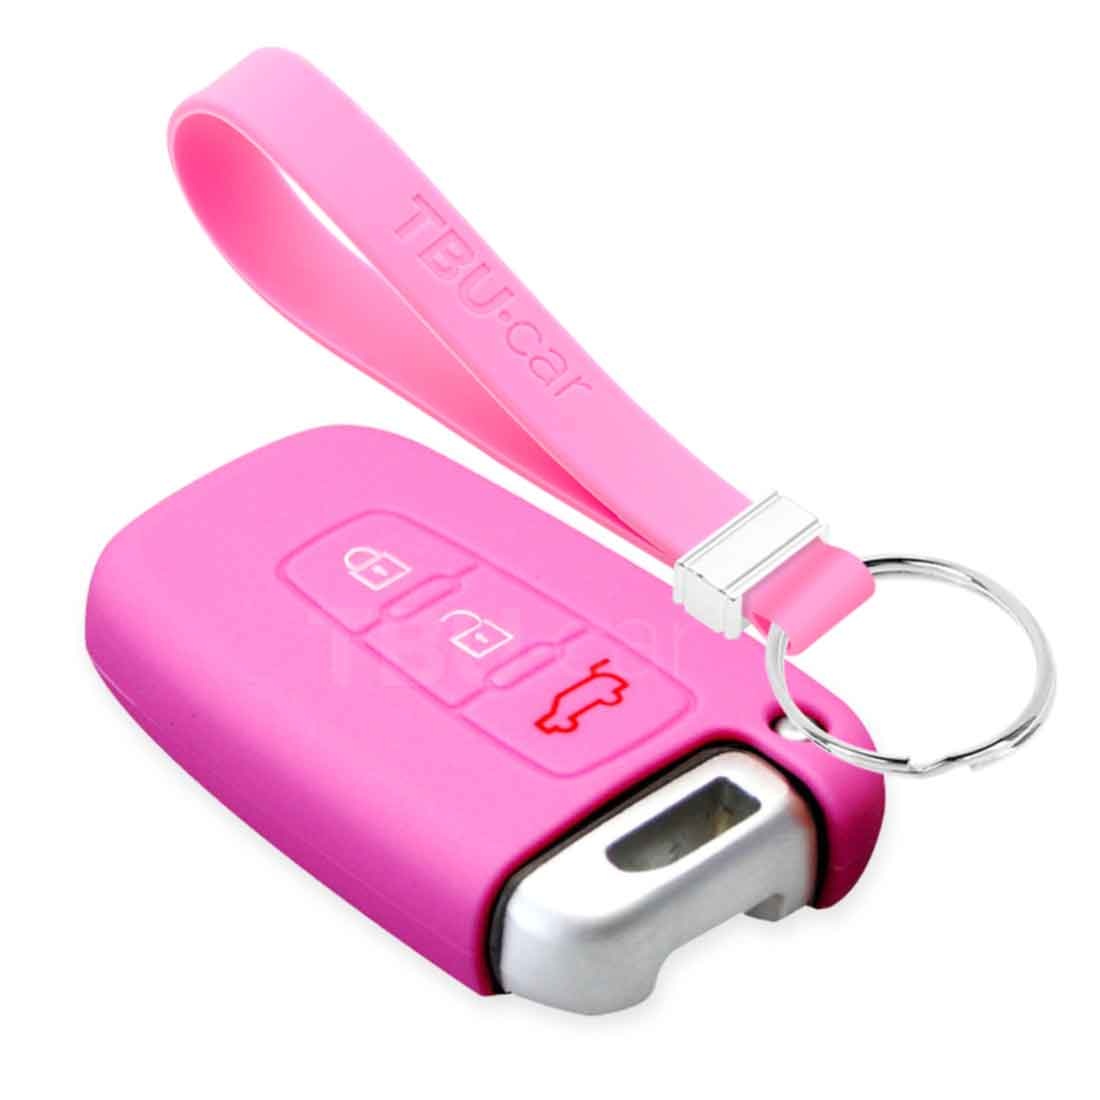 TBU car TBU car Car key cover compatible with Kia - Silicone Protective Remote Key Shell - FOB Case Cover - Pink